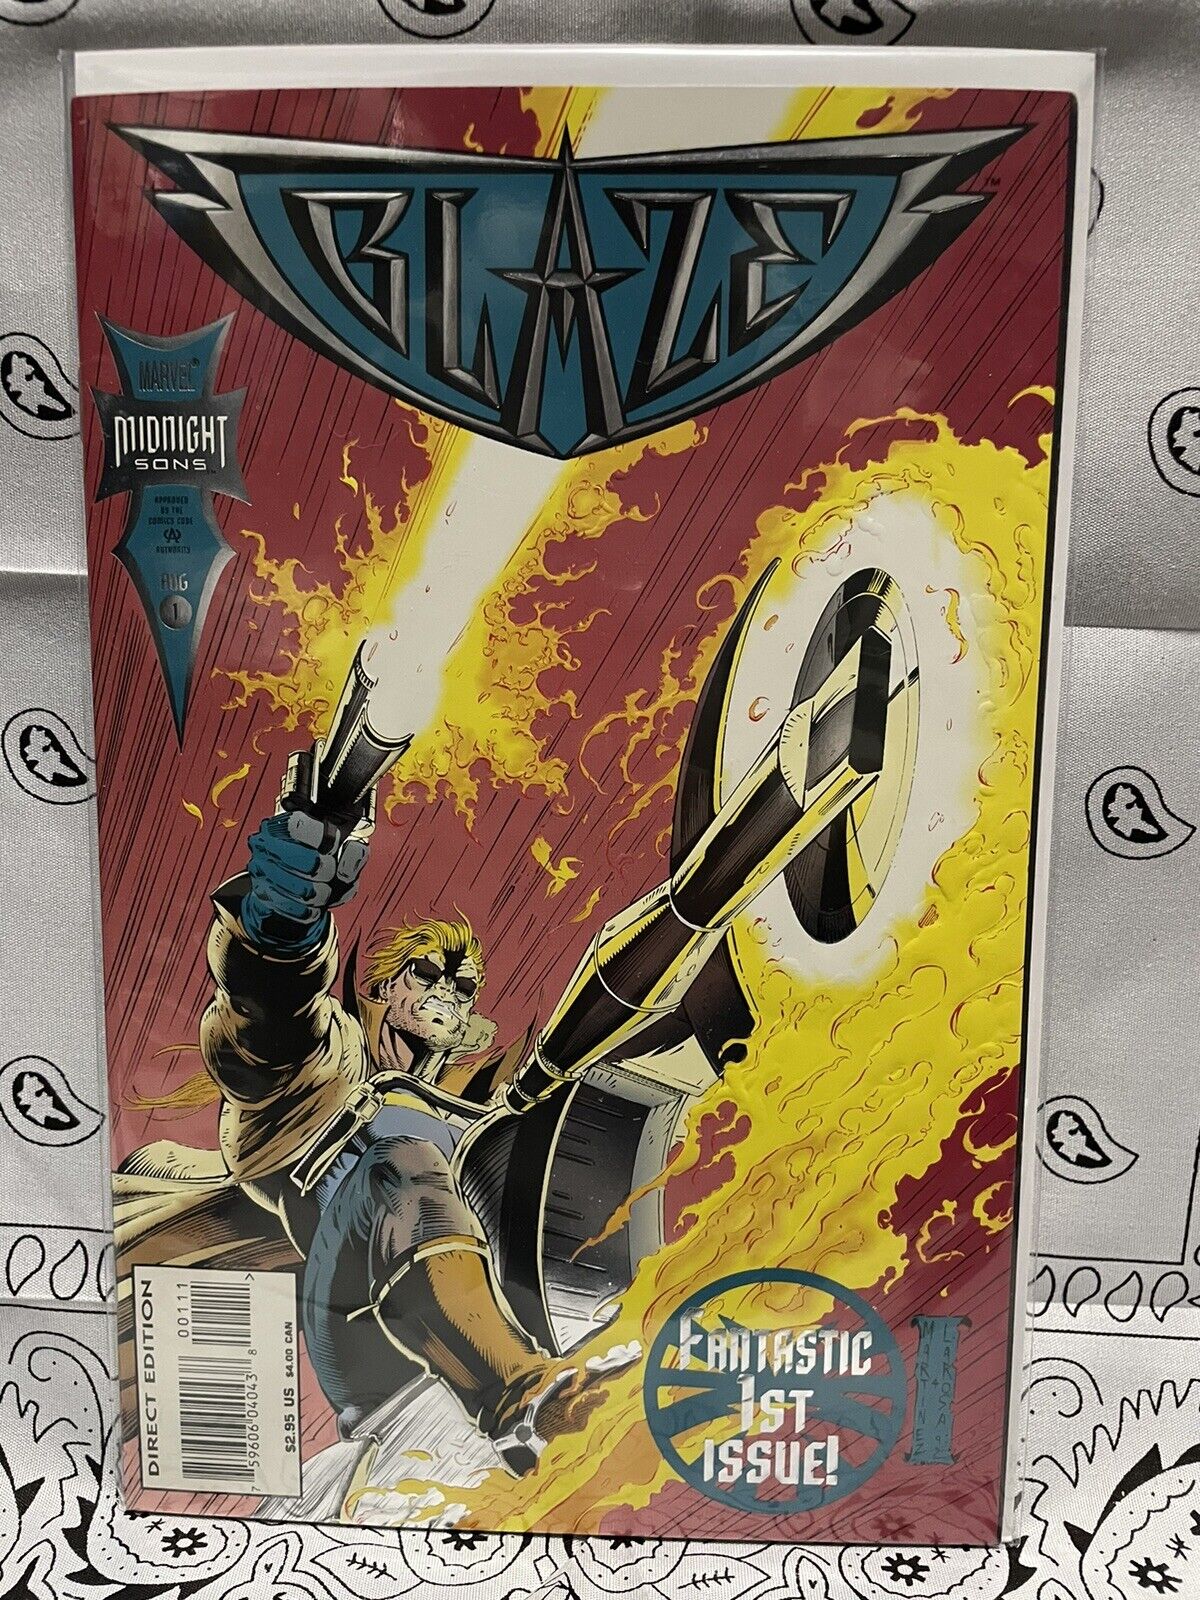 Blaze #1 (Marvel Comics August 1994)